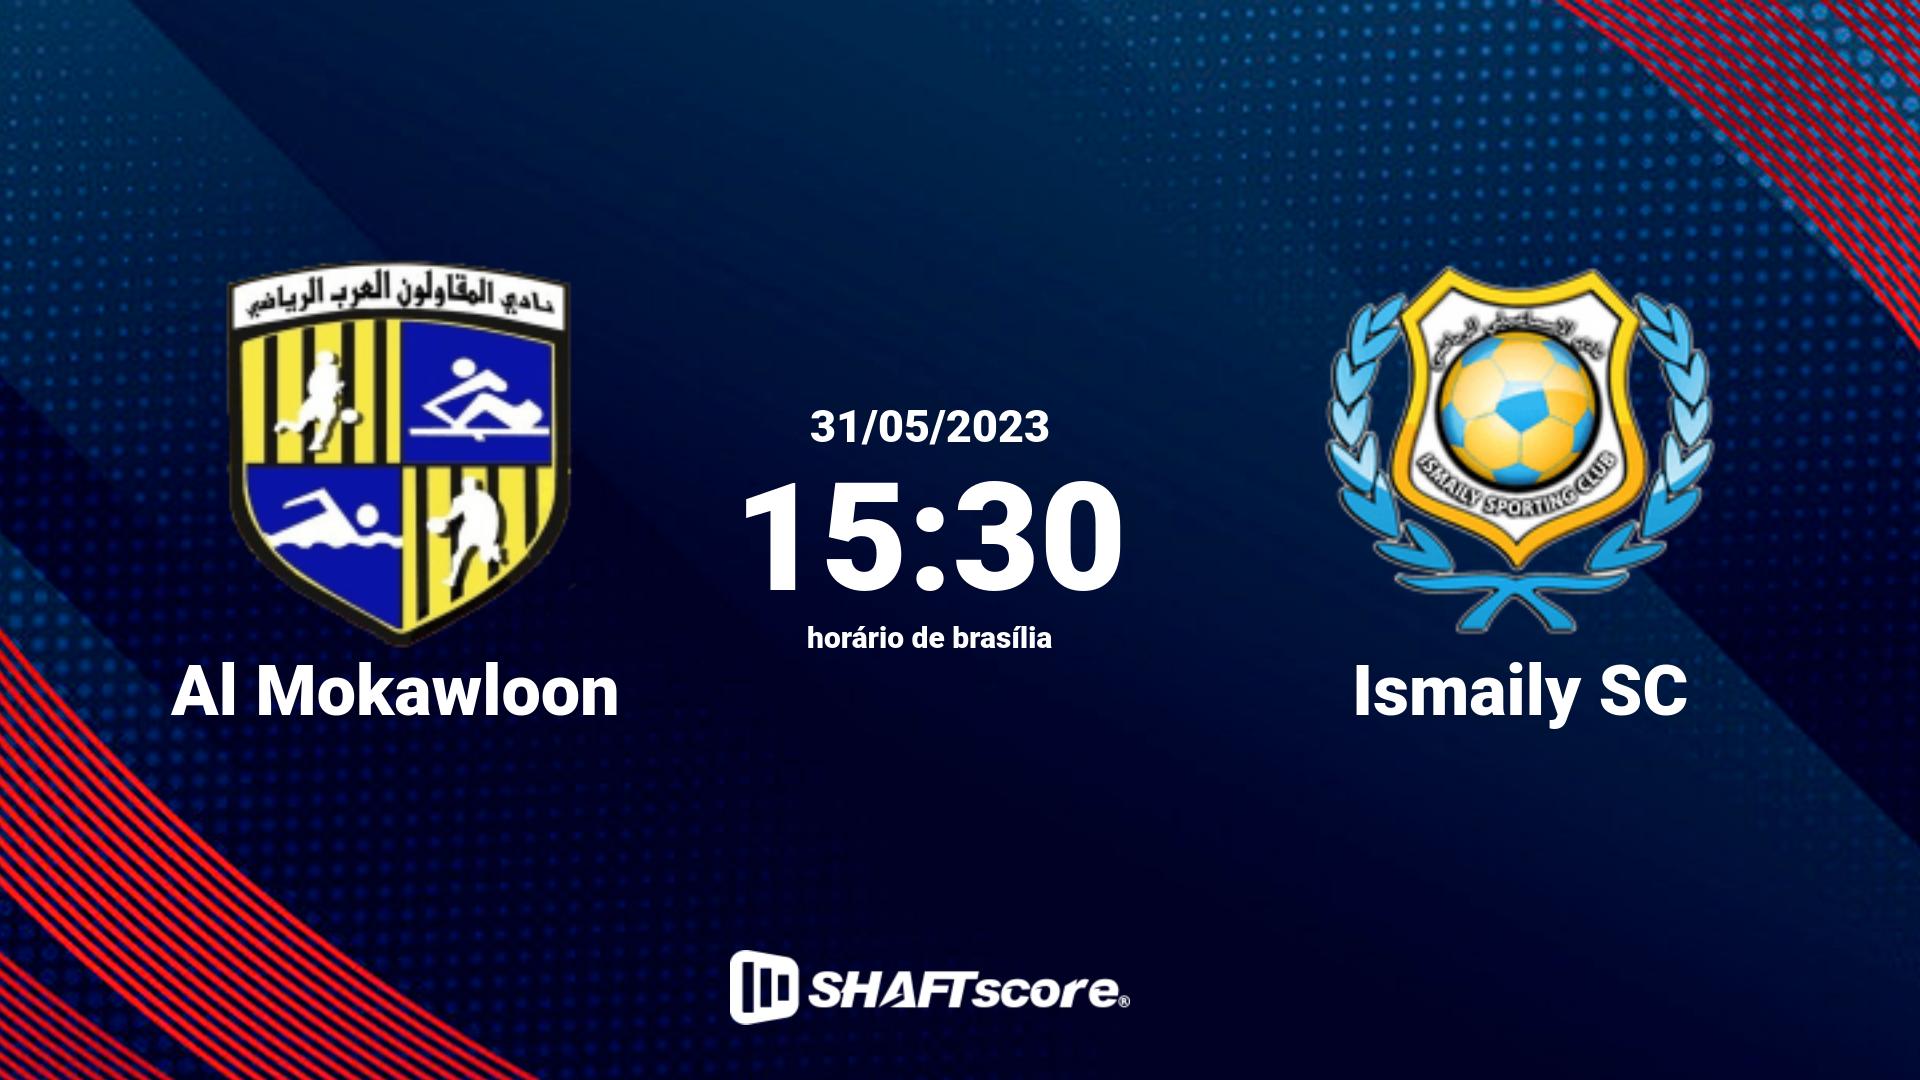 Estatísticas do jogo Al Mokawloon vs Ismaily SC 31.05 15:30